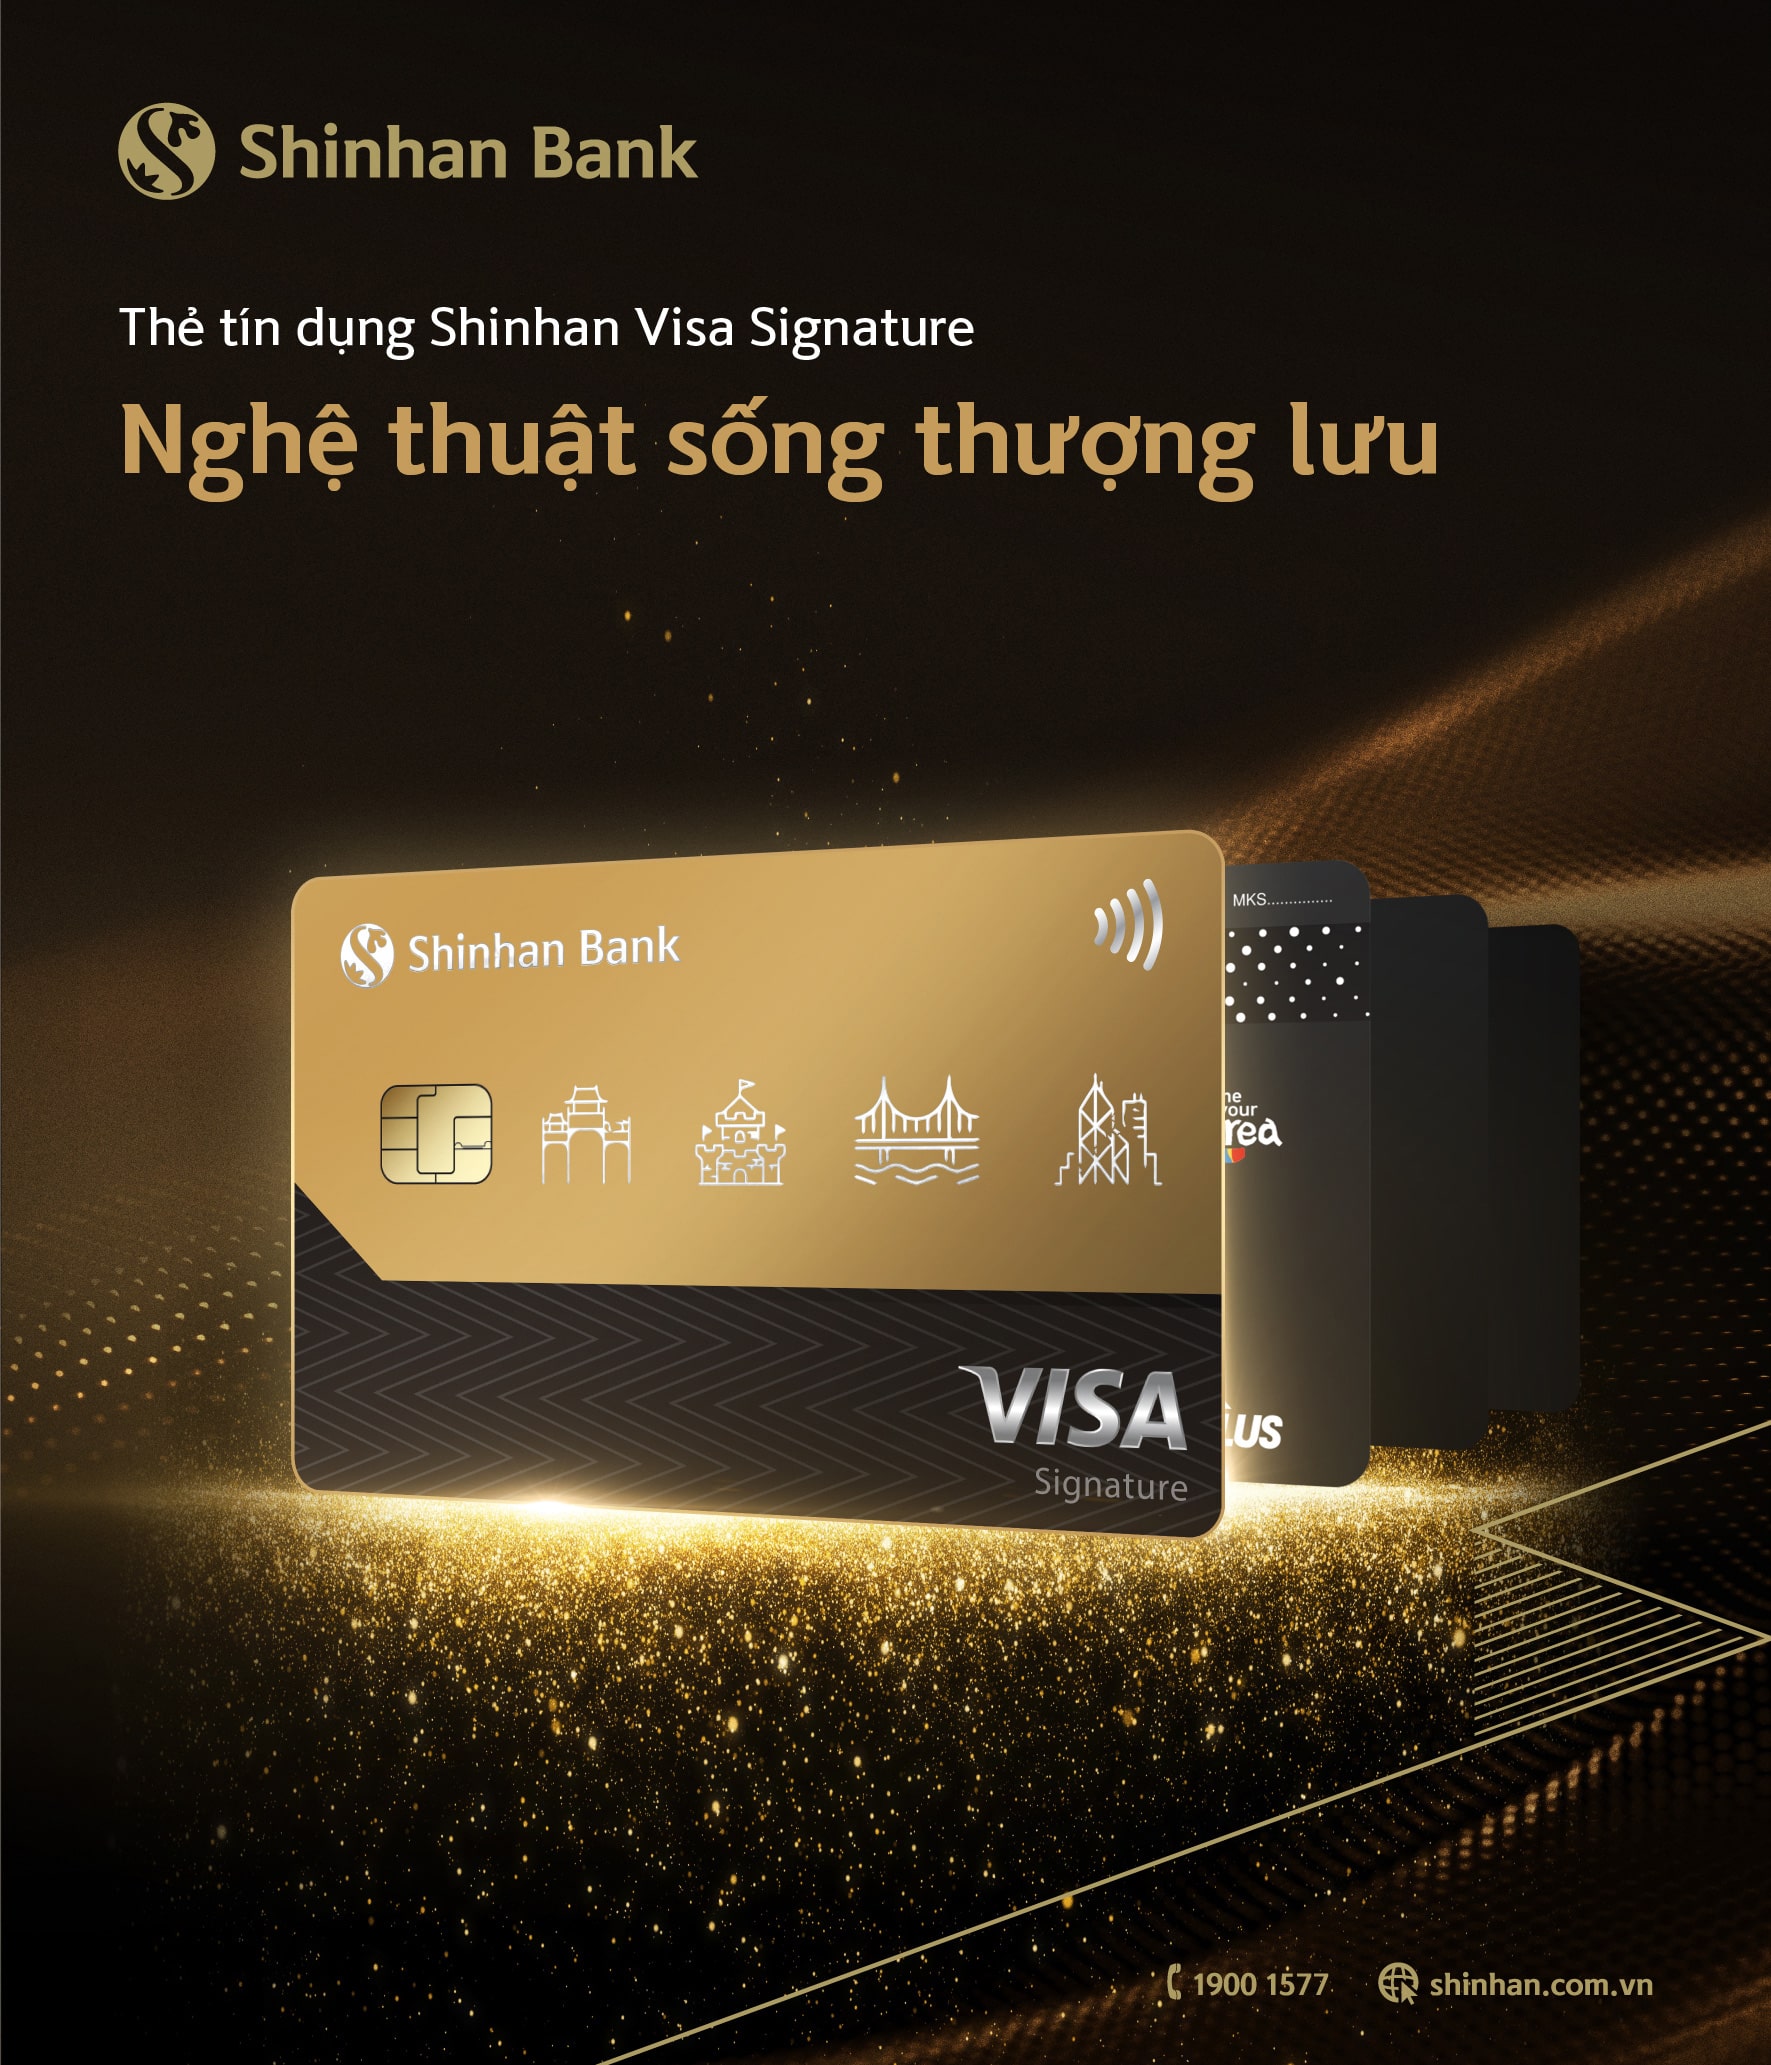 The tin dung quoc te Shinhan Visa PWM hang Bach kim12